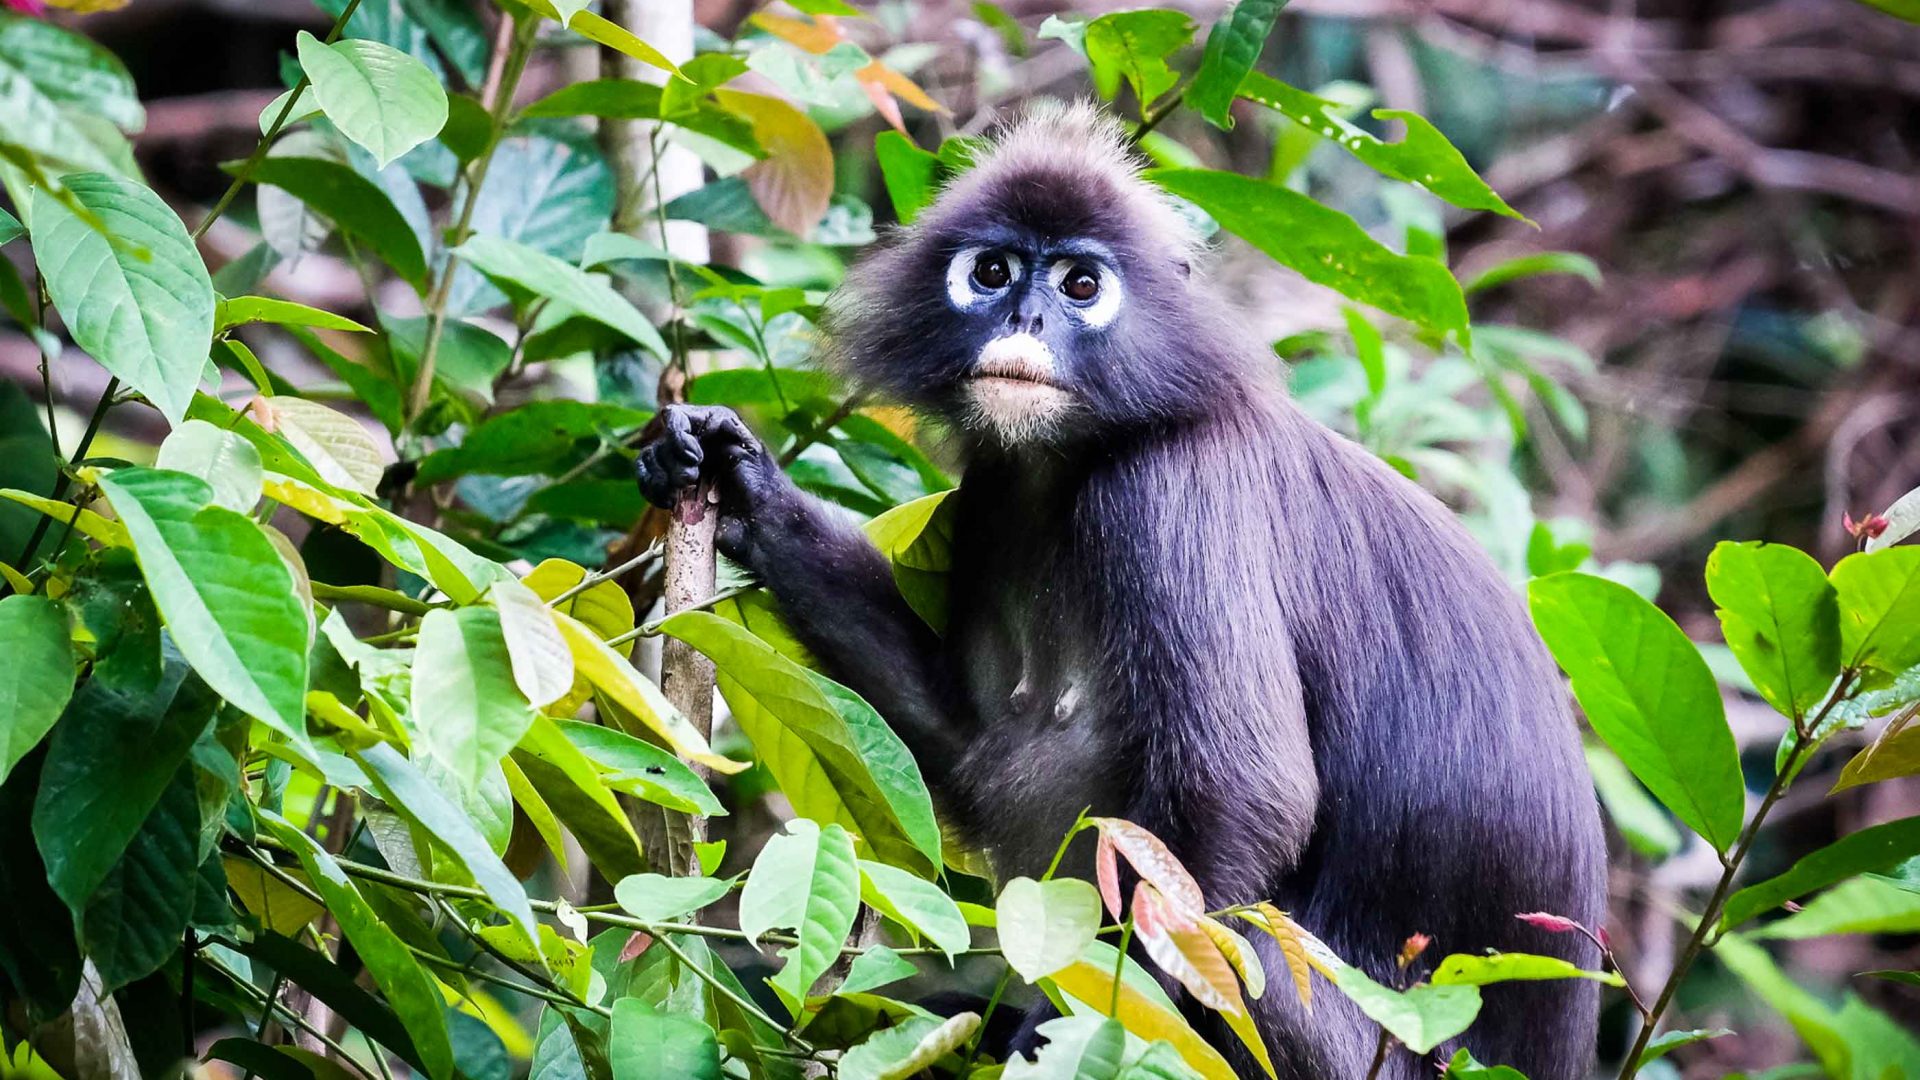 A primate in the rainforest.